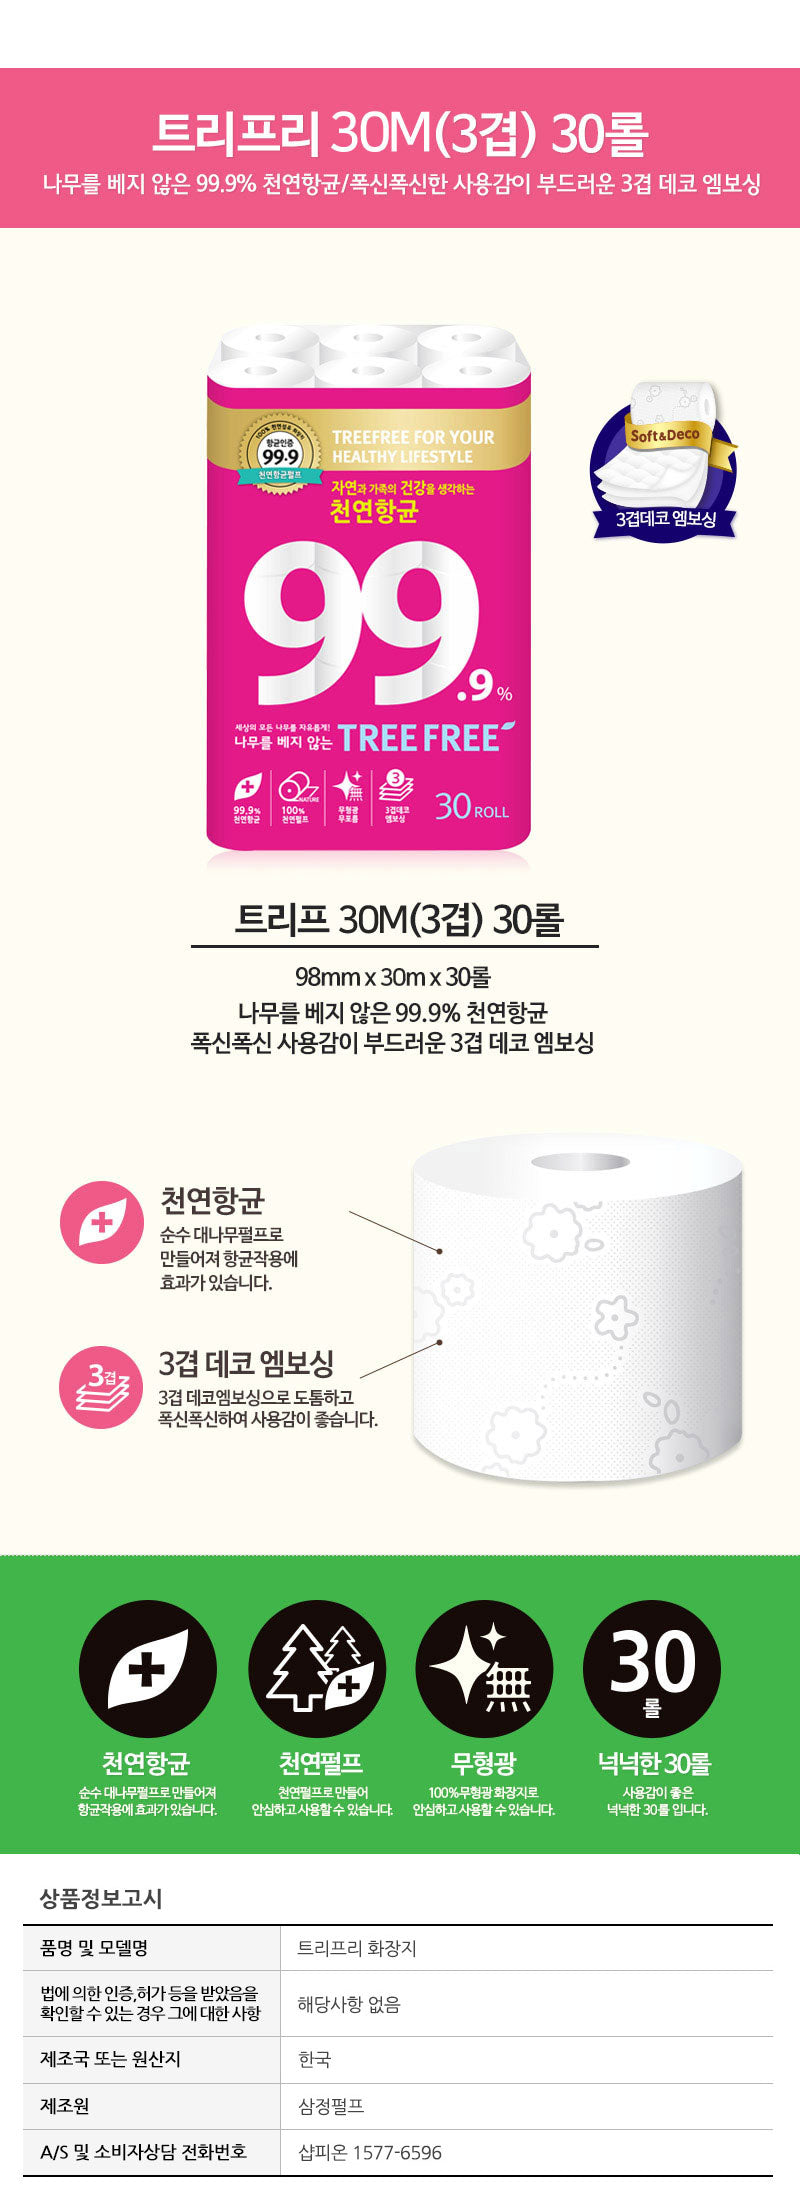 시드니 ONLY🚛<br>트리프 30M(3겹) 30롤<br>Tree free antibacterial toilet paper